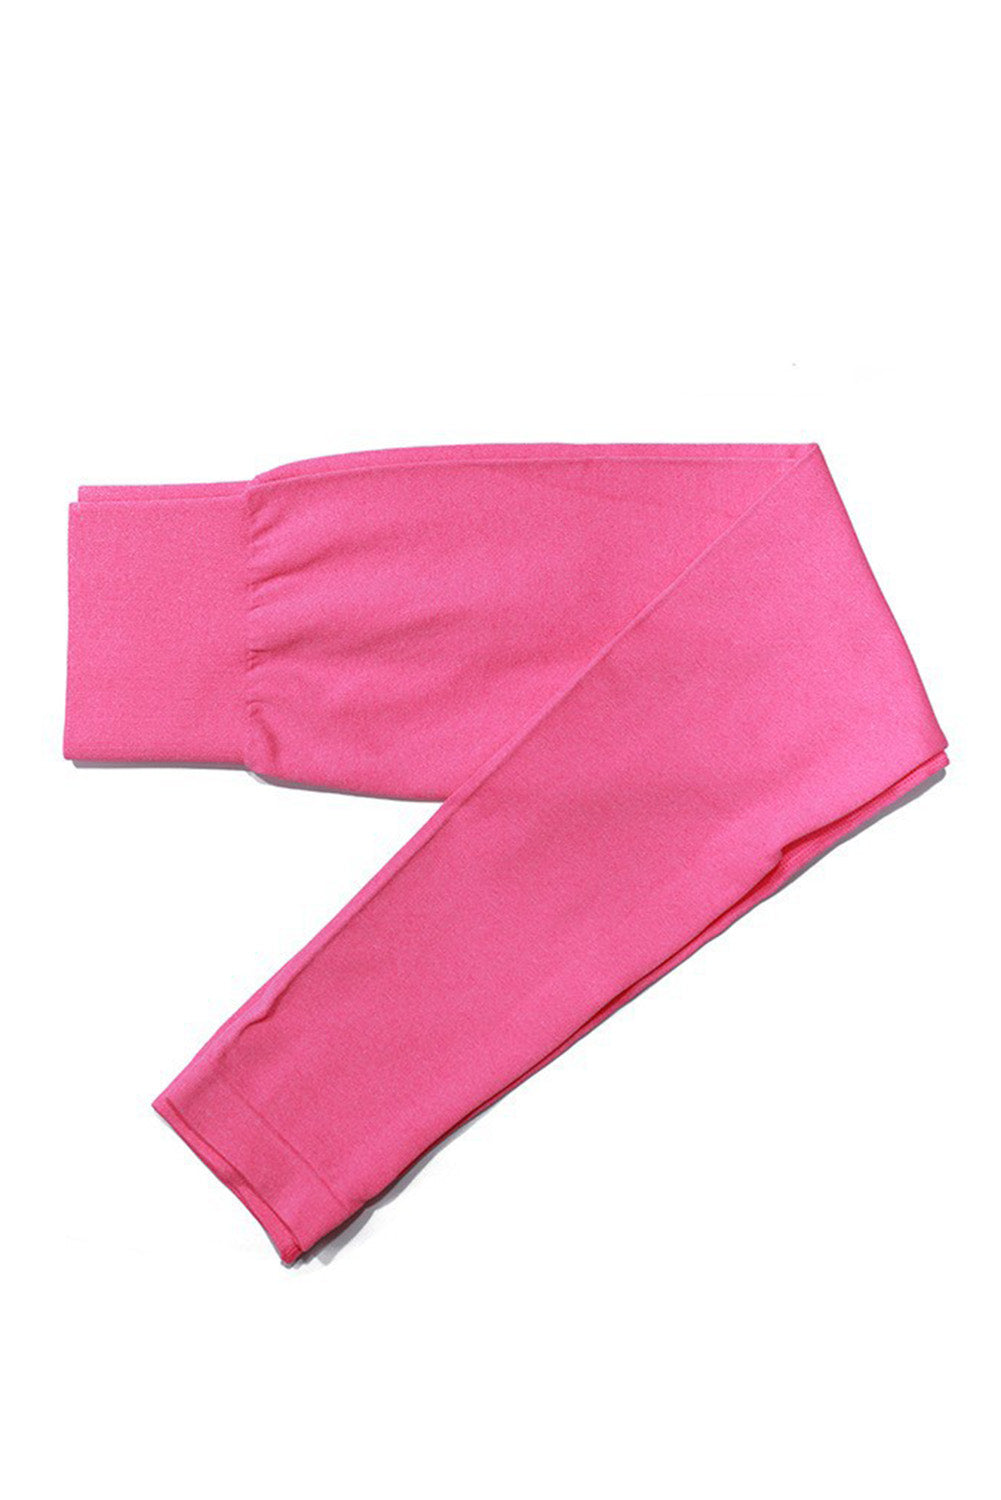 Rose Solid Color Seamless High Waist Yoga Pants